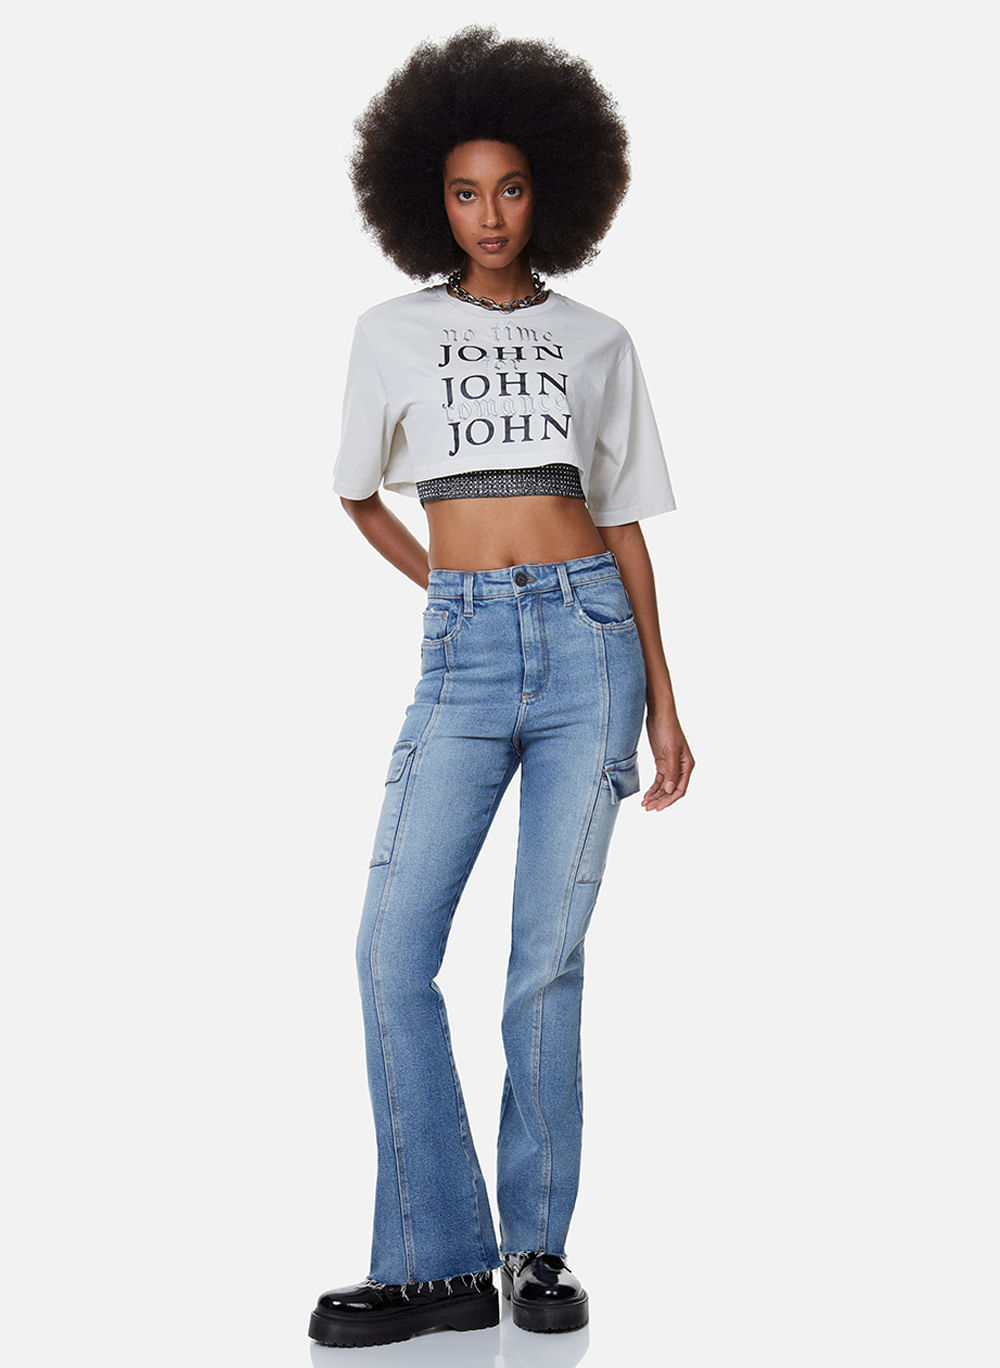 JOHN JOHN FEM Camiseta John John Kids Million Feminina (ESTAMPADO